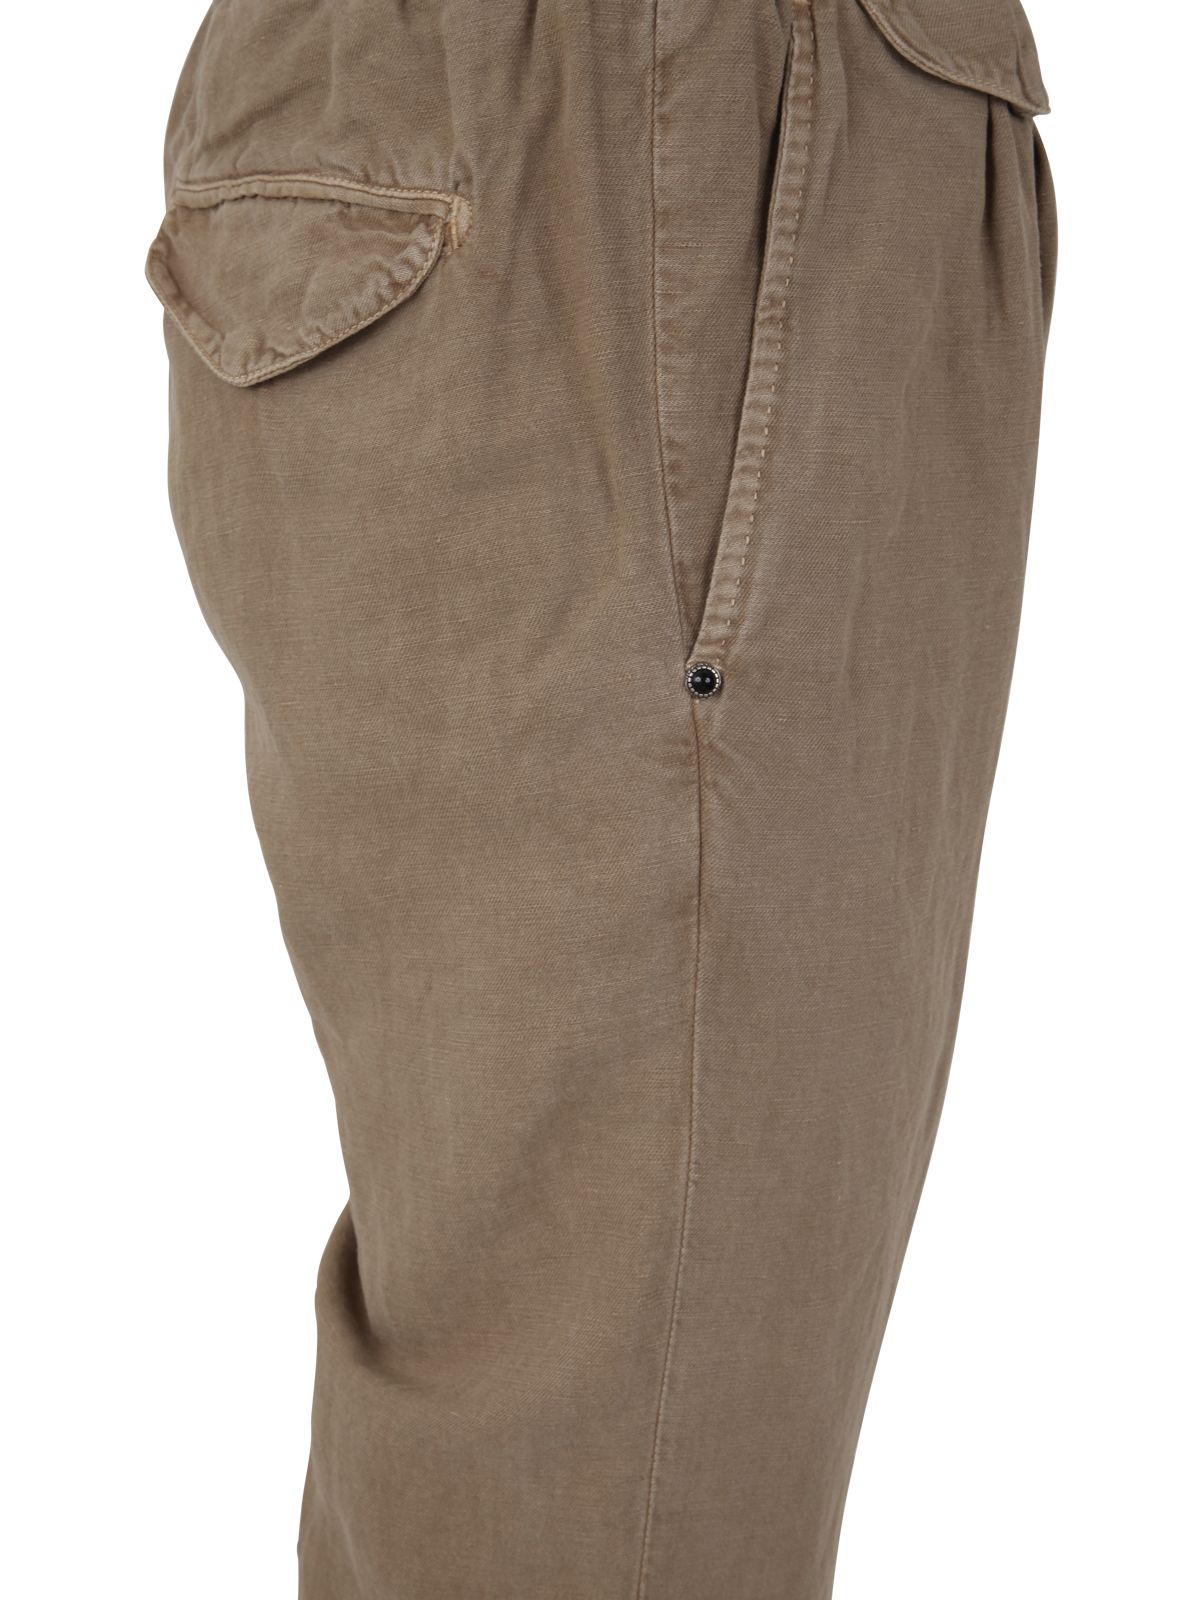 Shop White Sand Men's Pants: Long Trousers